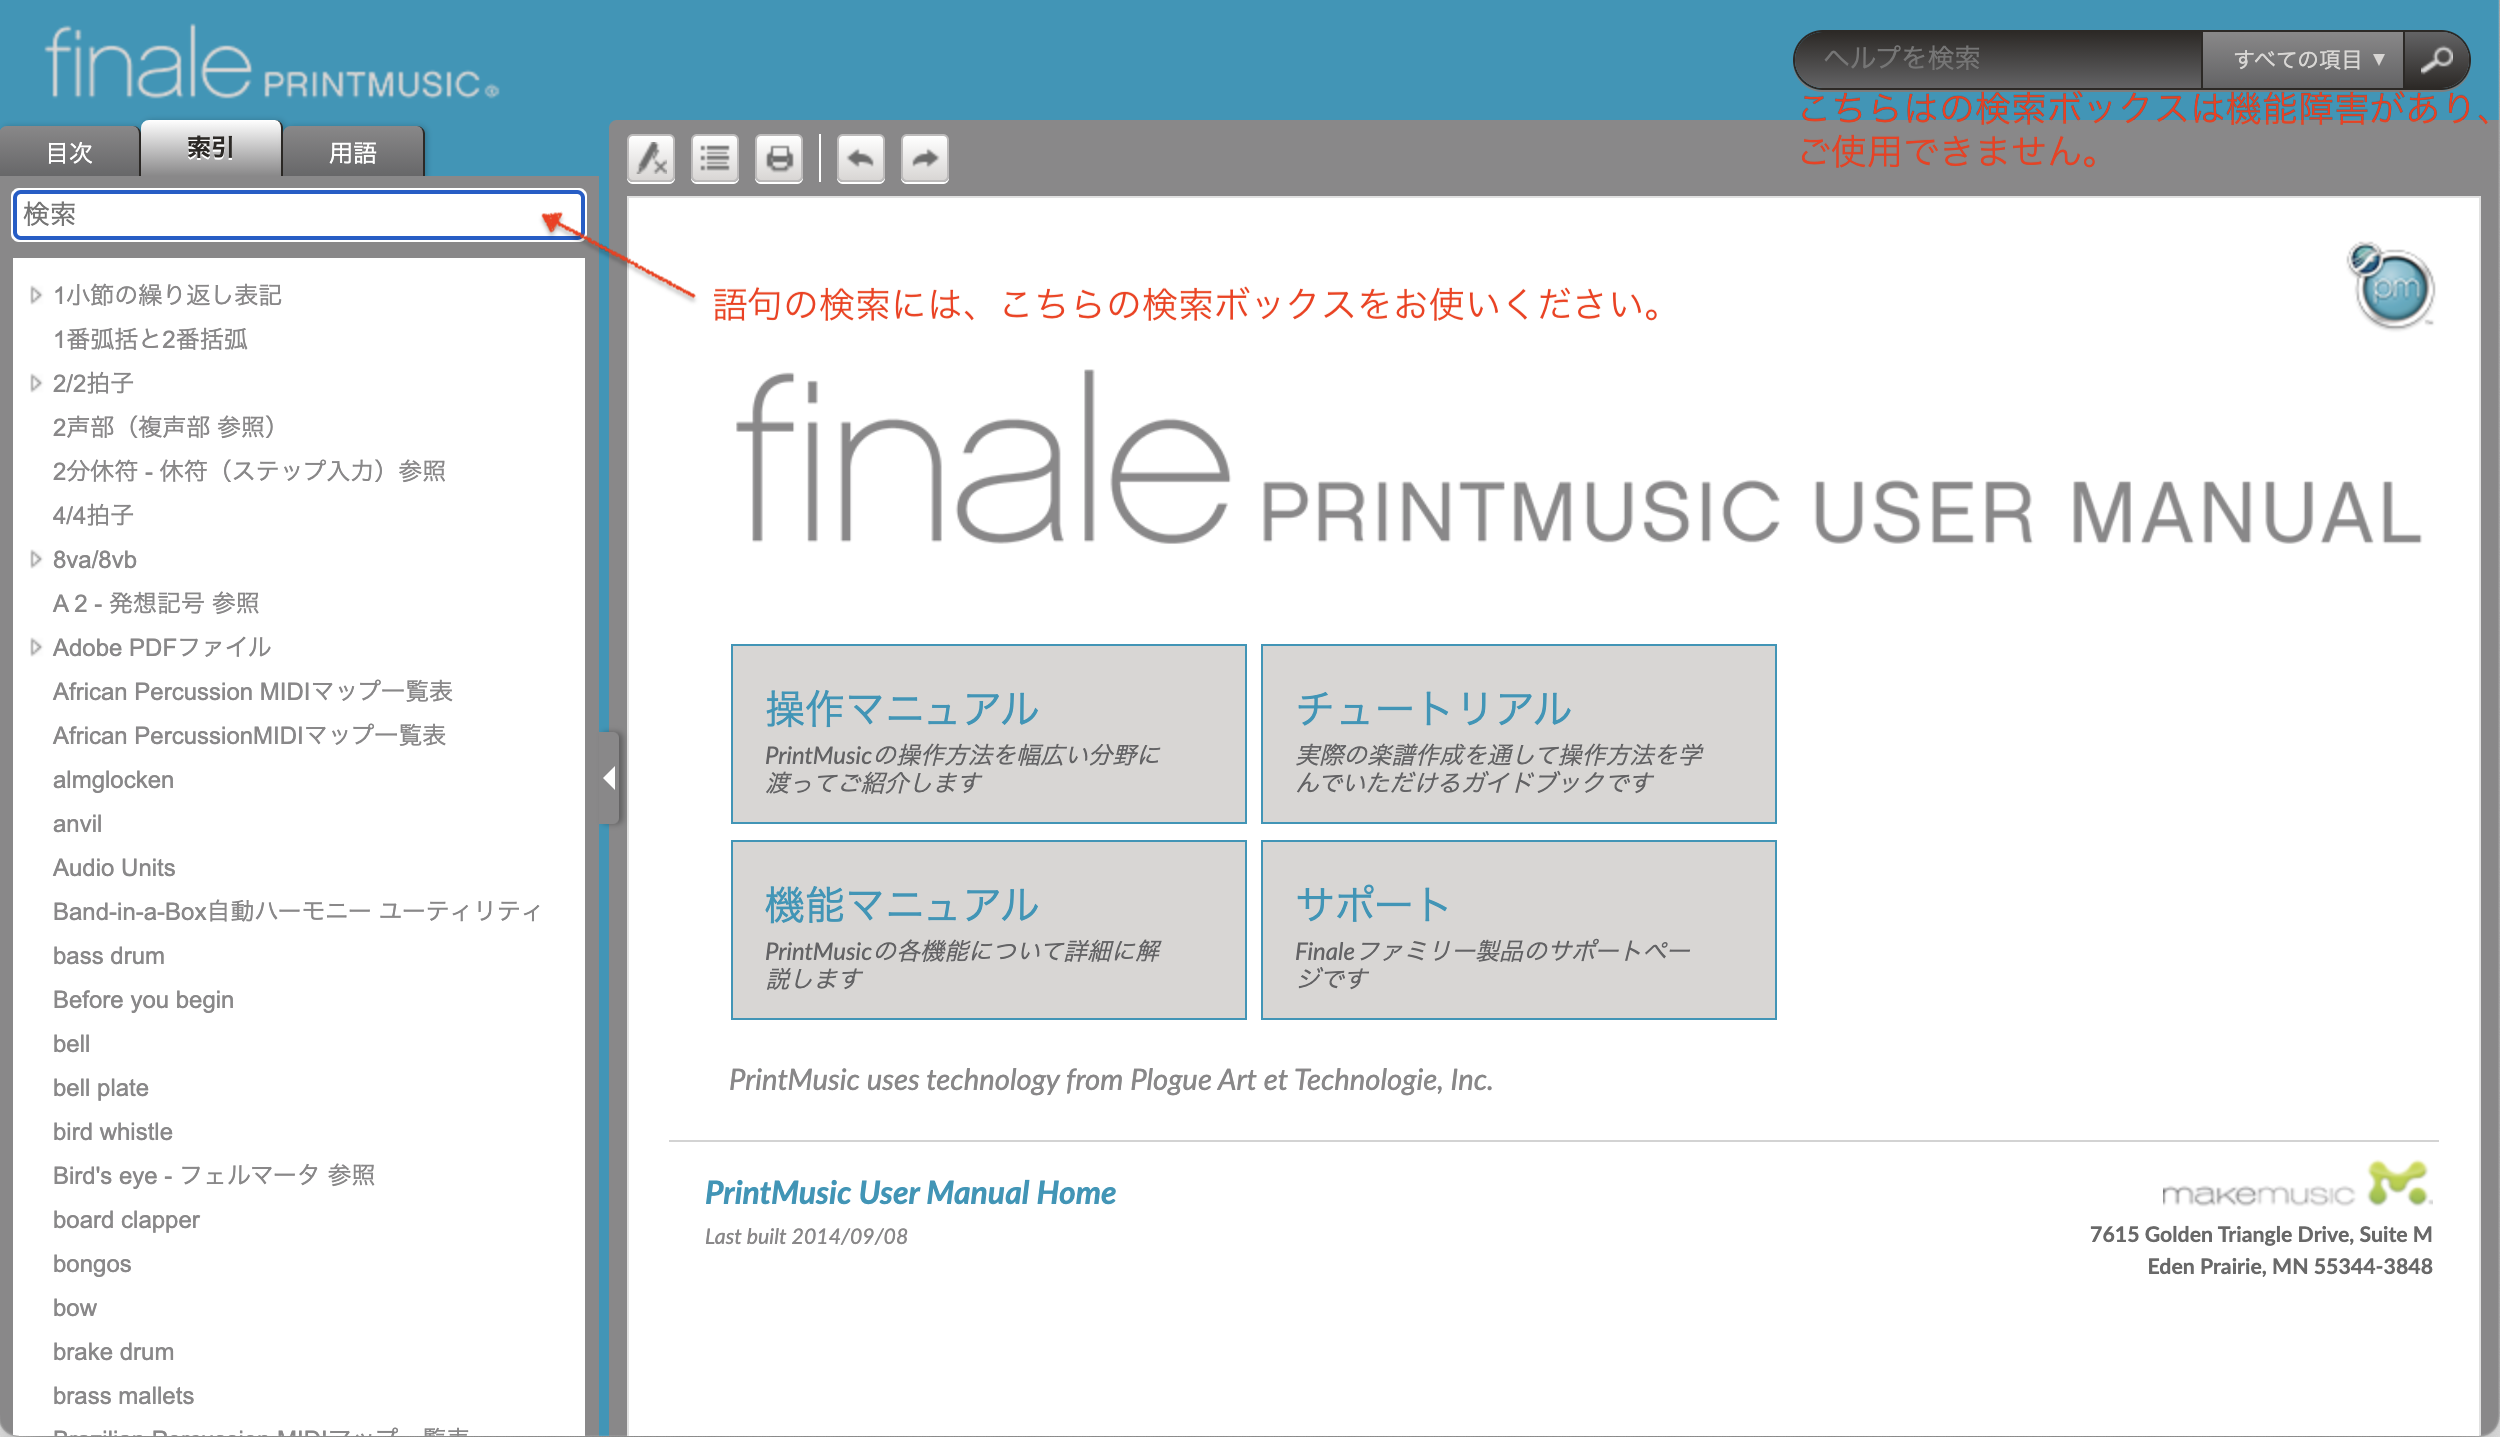 PrintMusic_UserManual_search_box.png